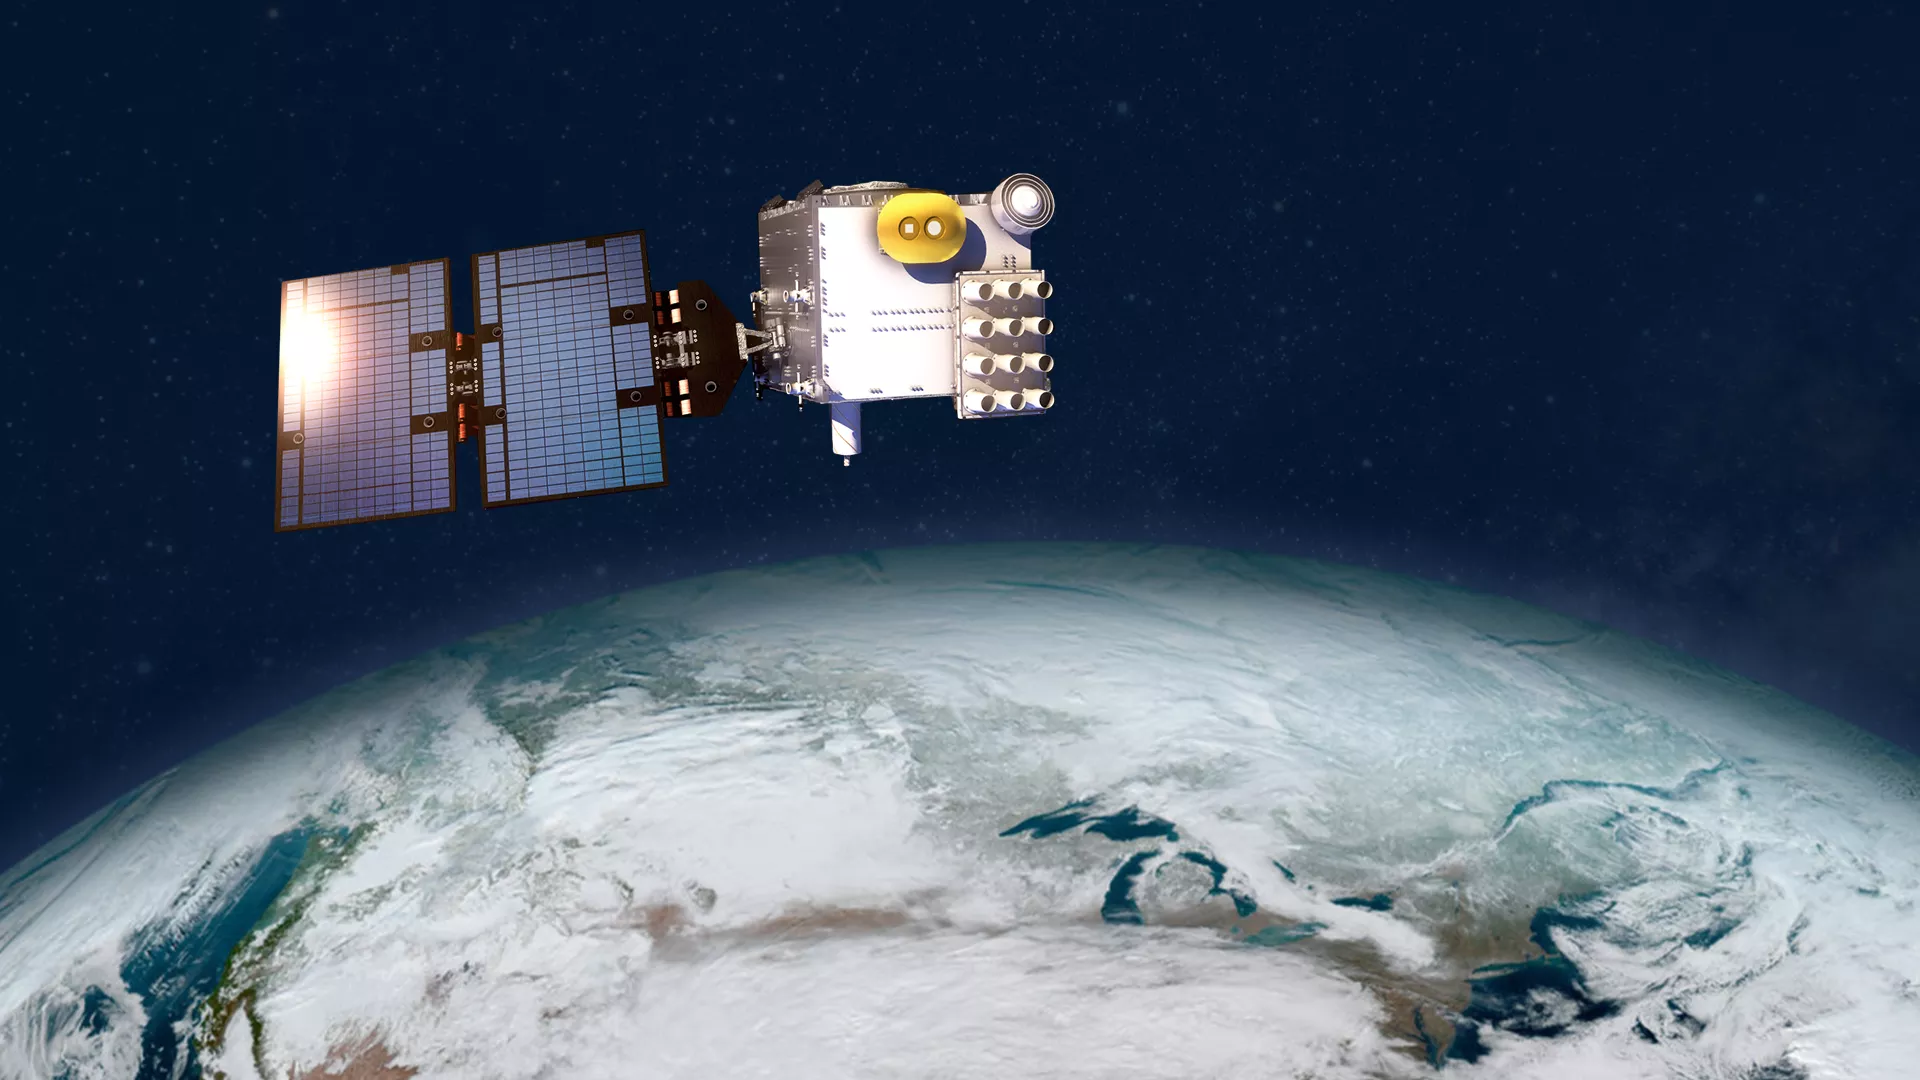 COSMIC satellite orbiting the Earth